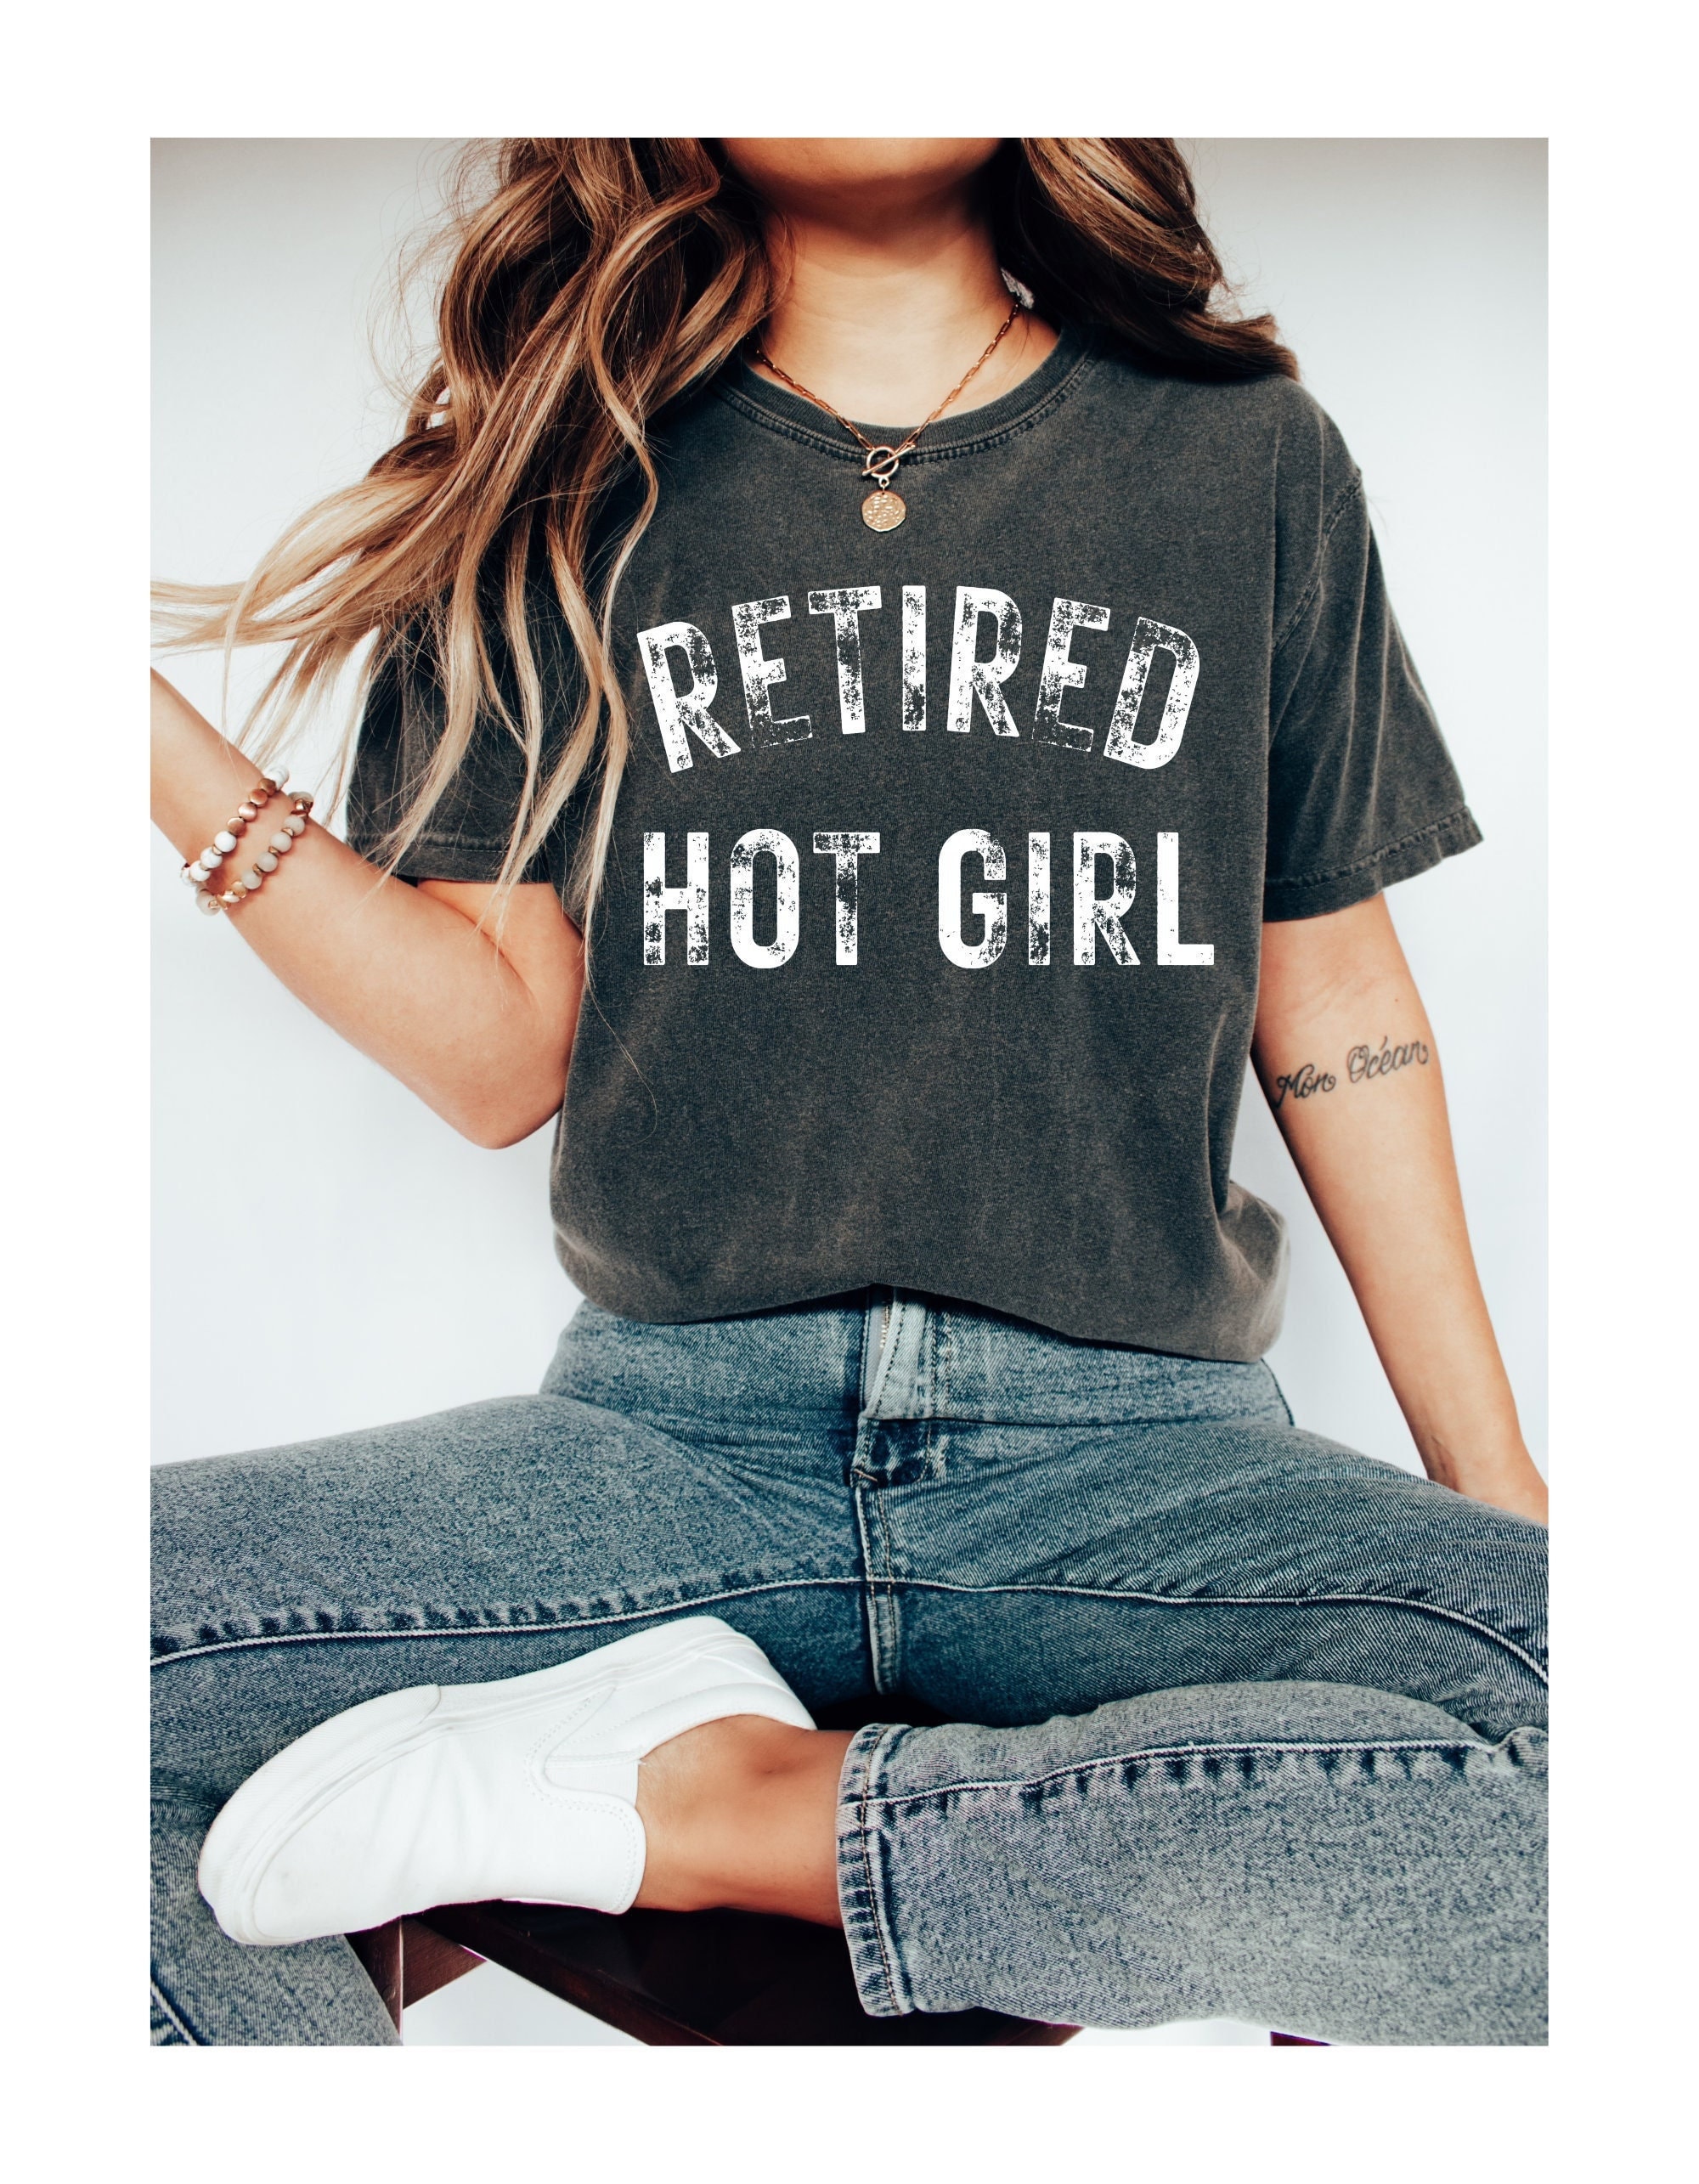 desy irawati recommends Hot Girls In Tshirts